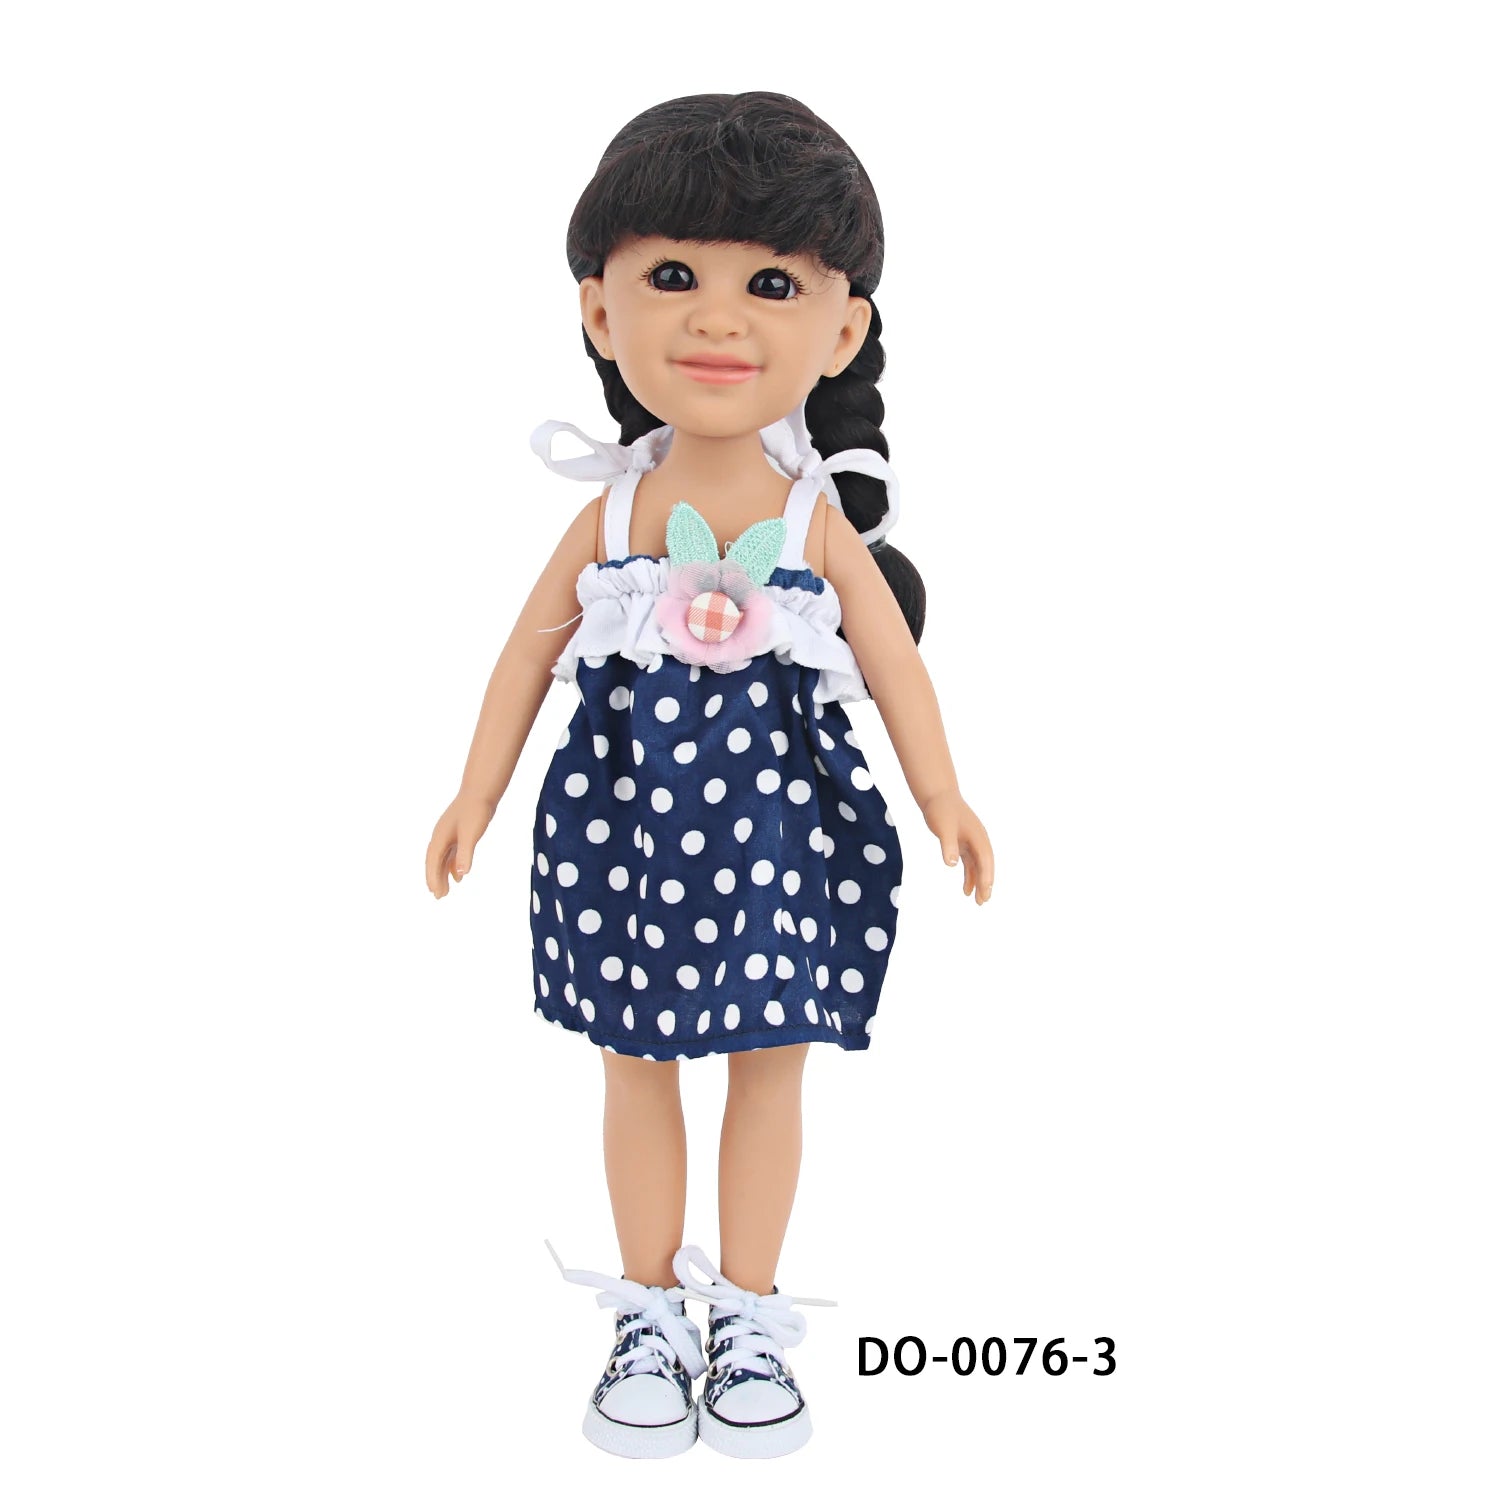 14 inch Girl Doll, American Girl WellieWishers like doll - Annie Potter's Yarn Basket